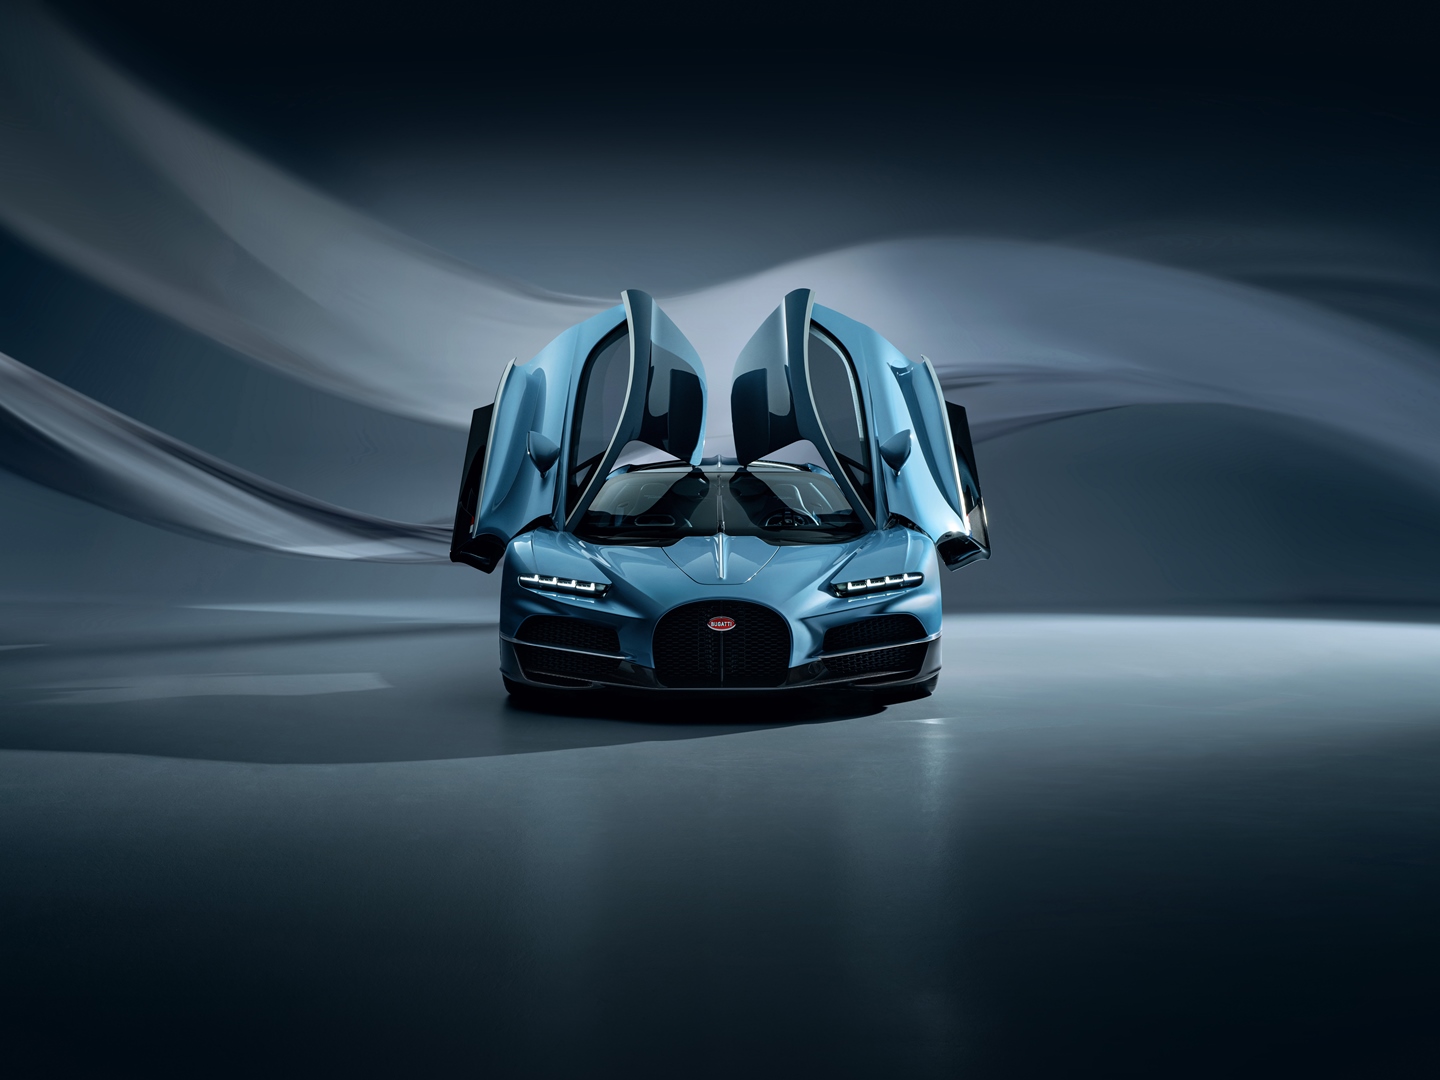 bugatti-world-premiere-presskit-images-26.jpg